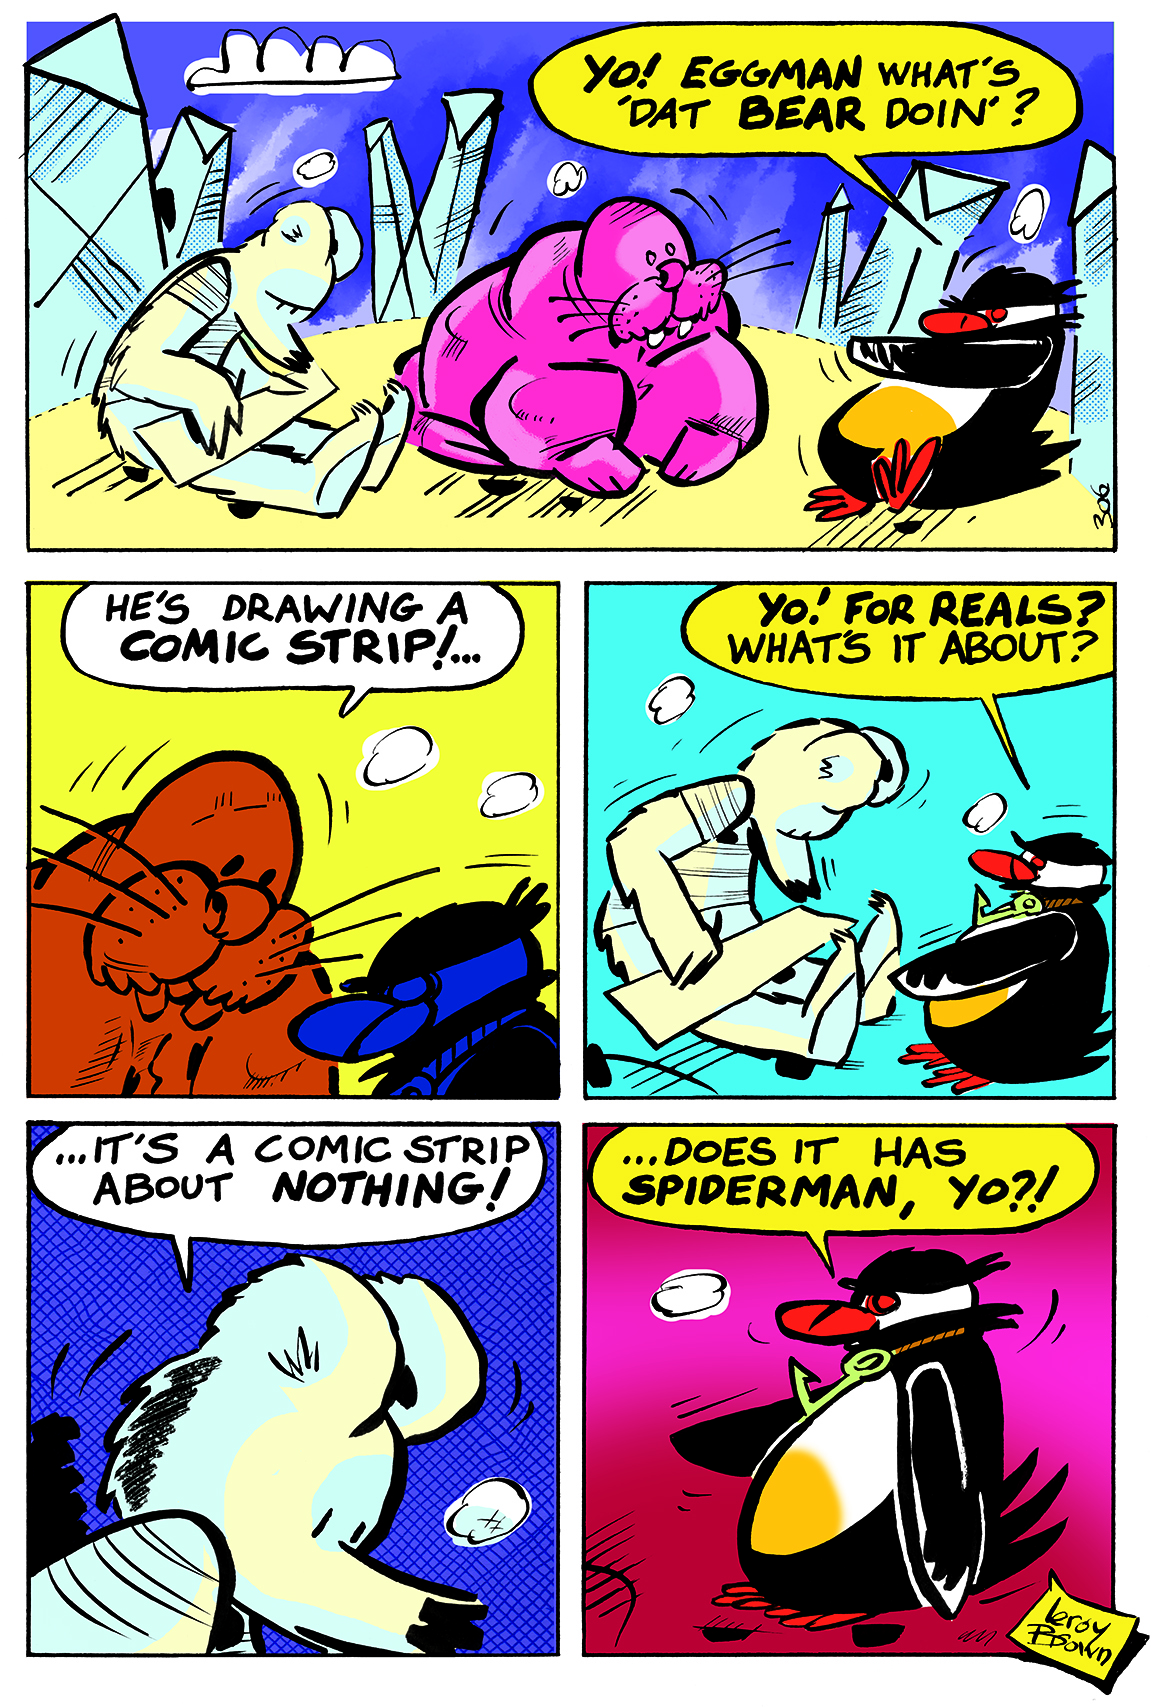 ICECUBES the comic strip #306